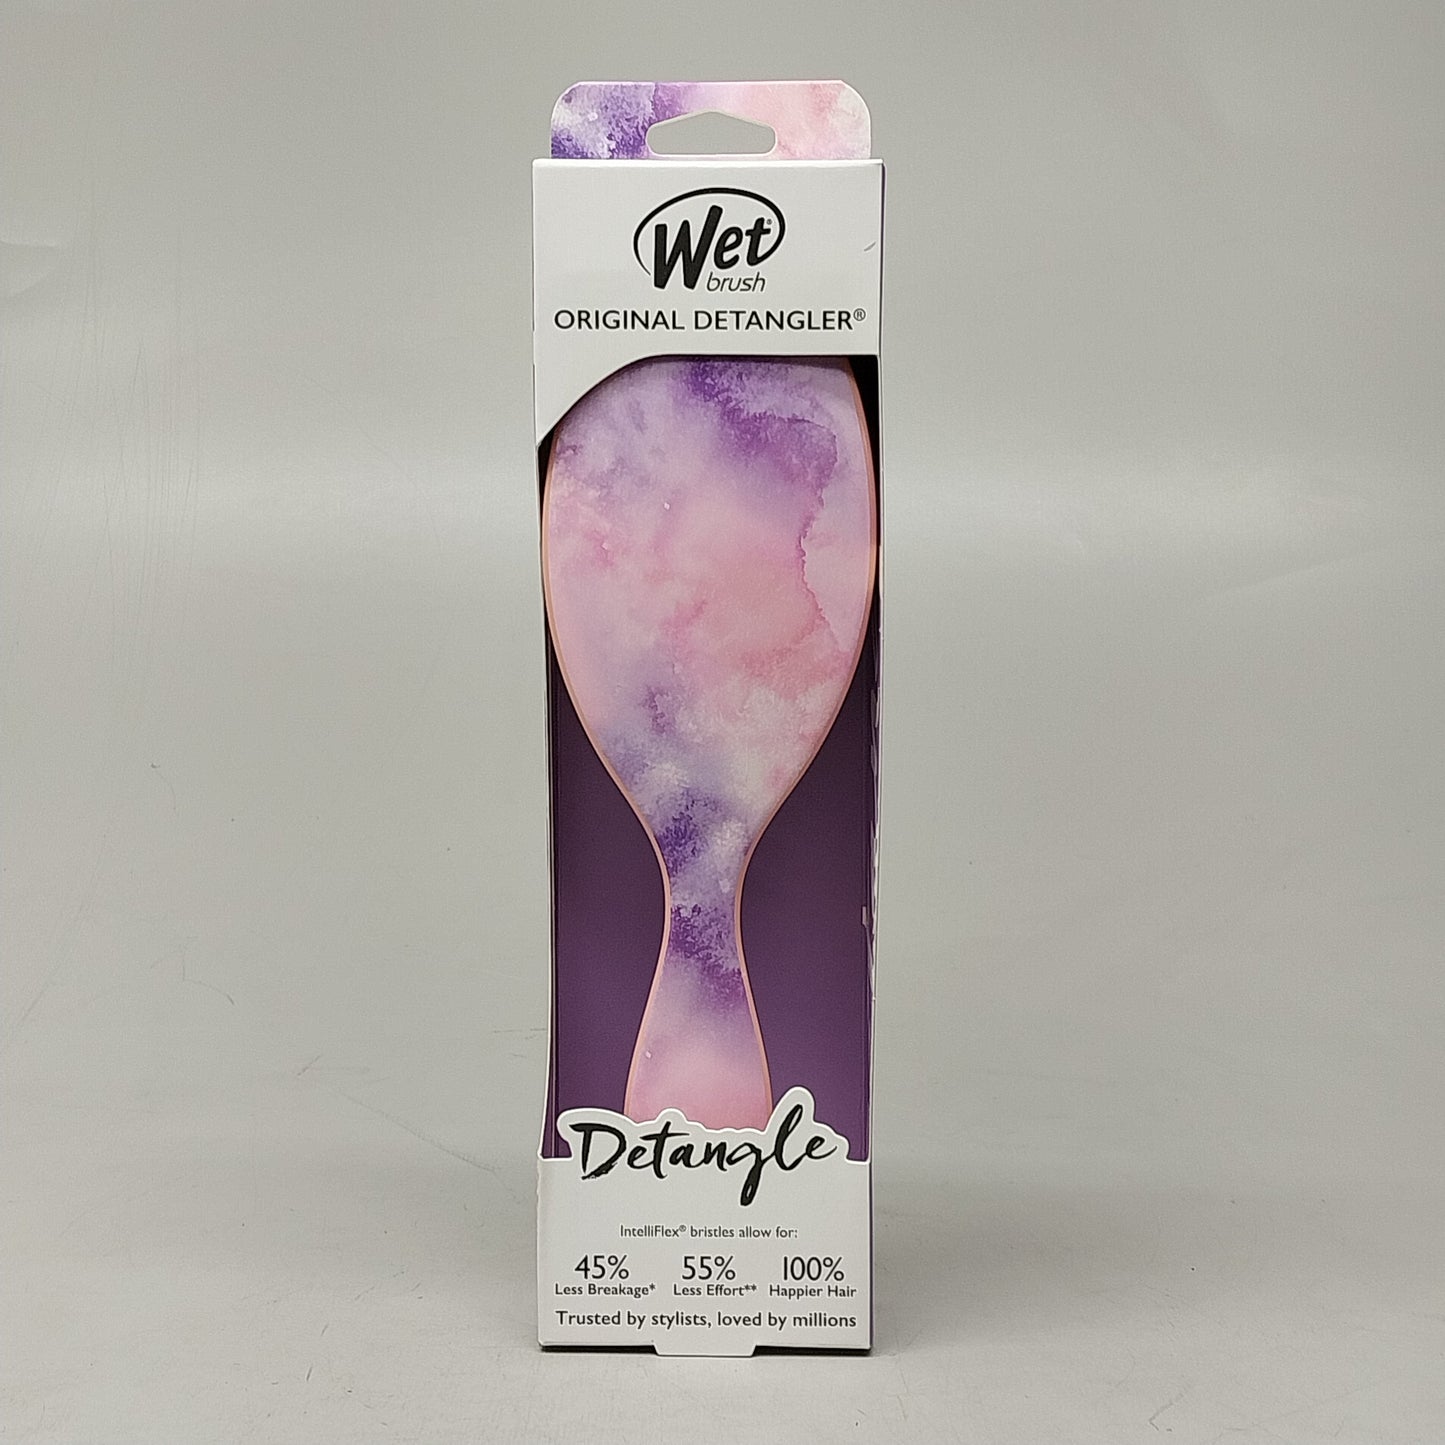 WET BRUSH (4 PACK) Original Detangler Hair Brush Pink / Purple Watermark Pattern